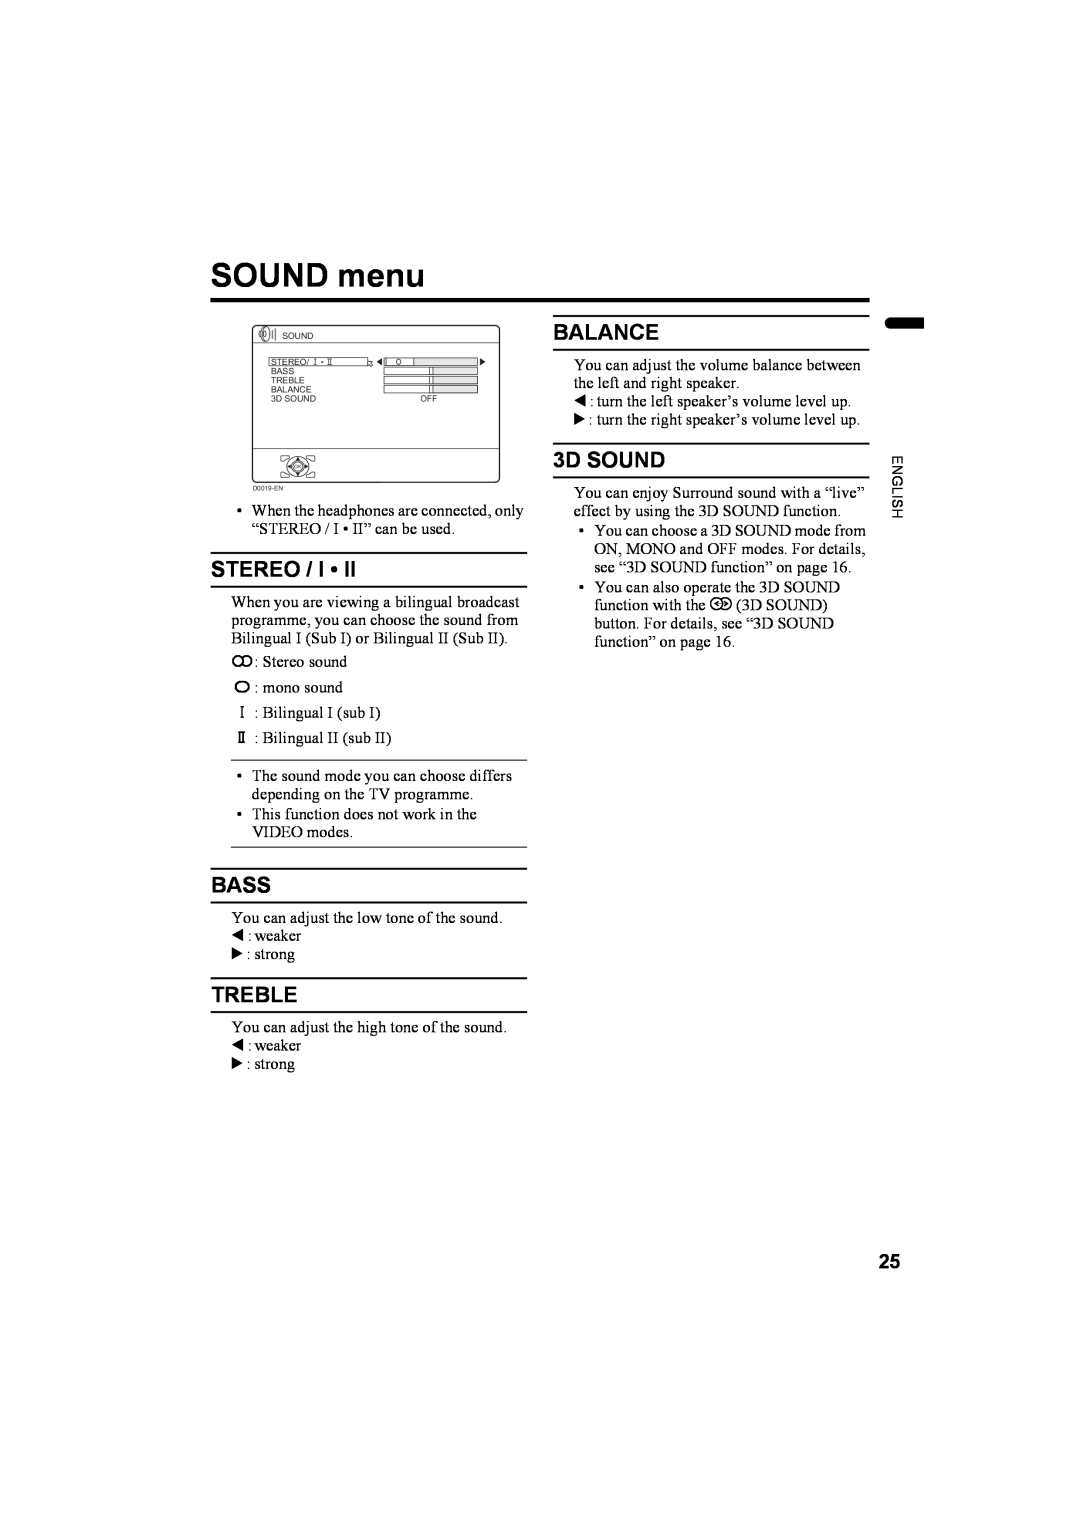 JVC LT-32AX5, LT-26AX5 manual SOUND menu, Stereo / I, Bass, Treble, Balance, 3D SOUND 